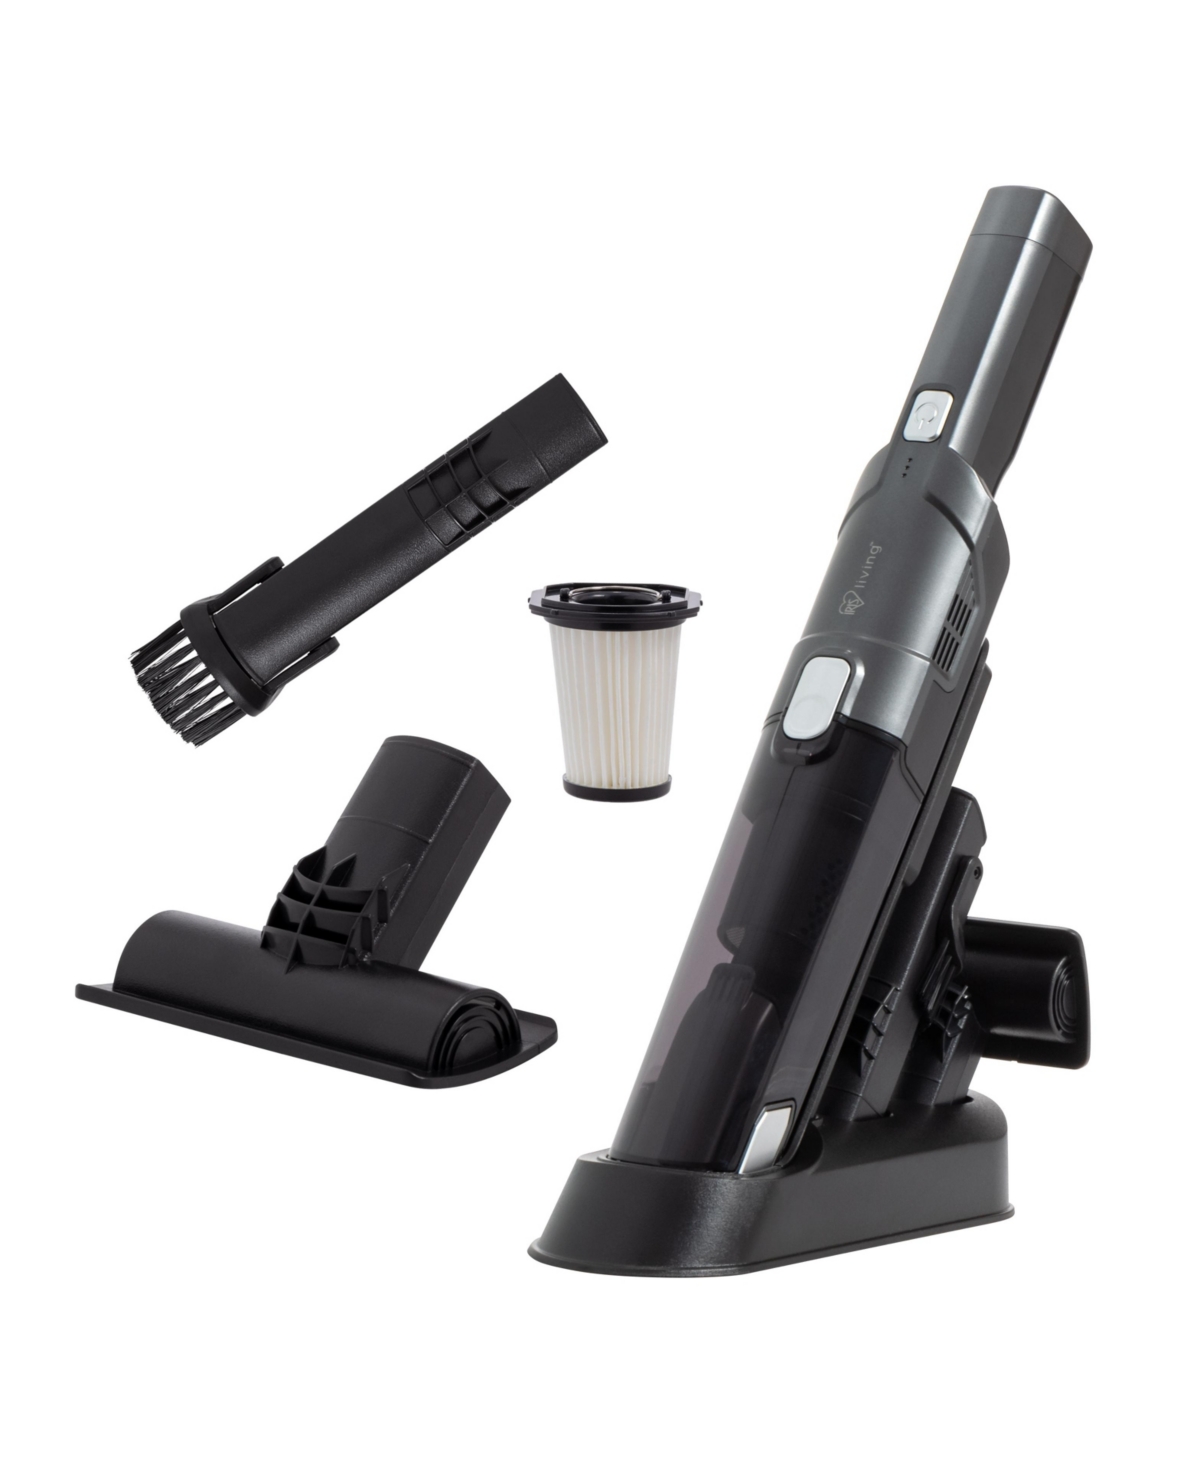 Cordless Handheld Vacuum, High Power Portable Vacuum Cleaner - Black